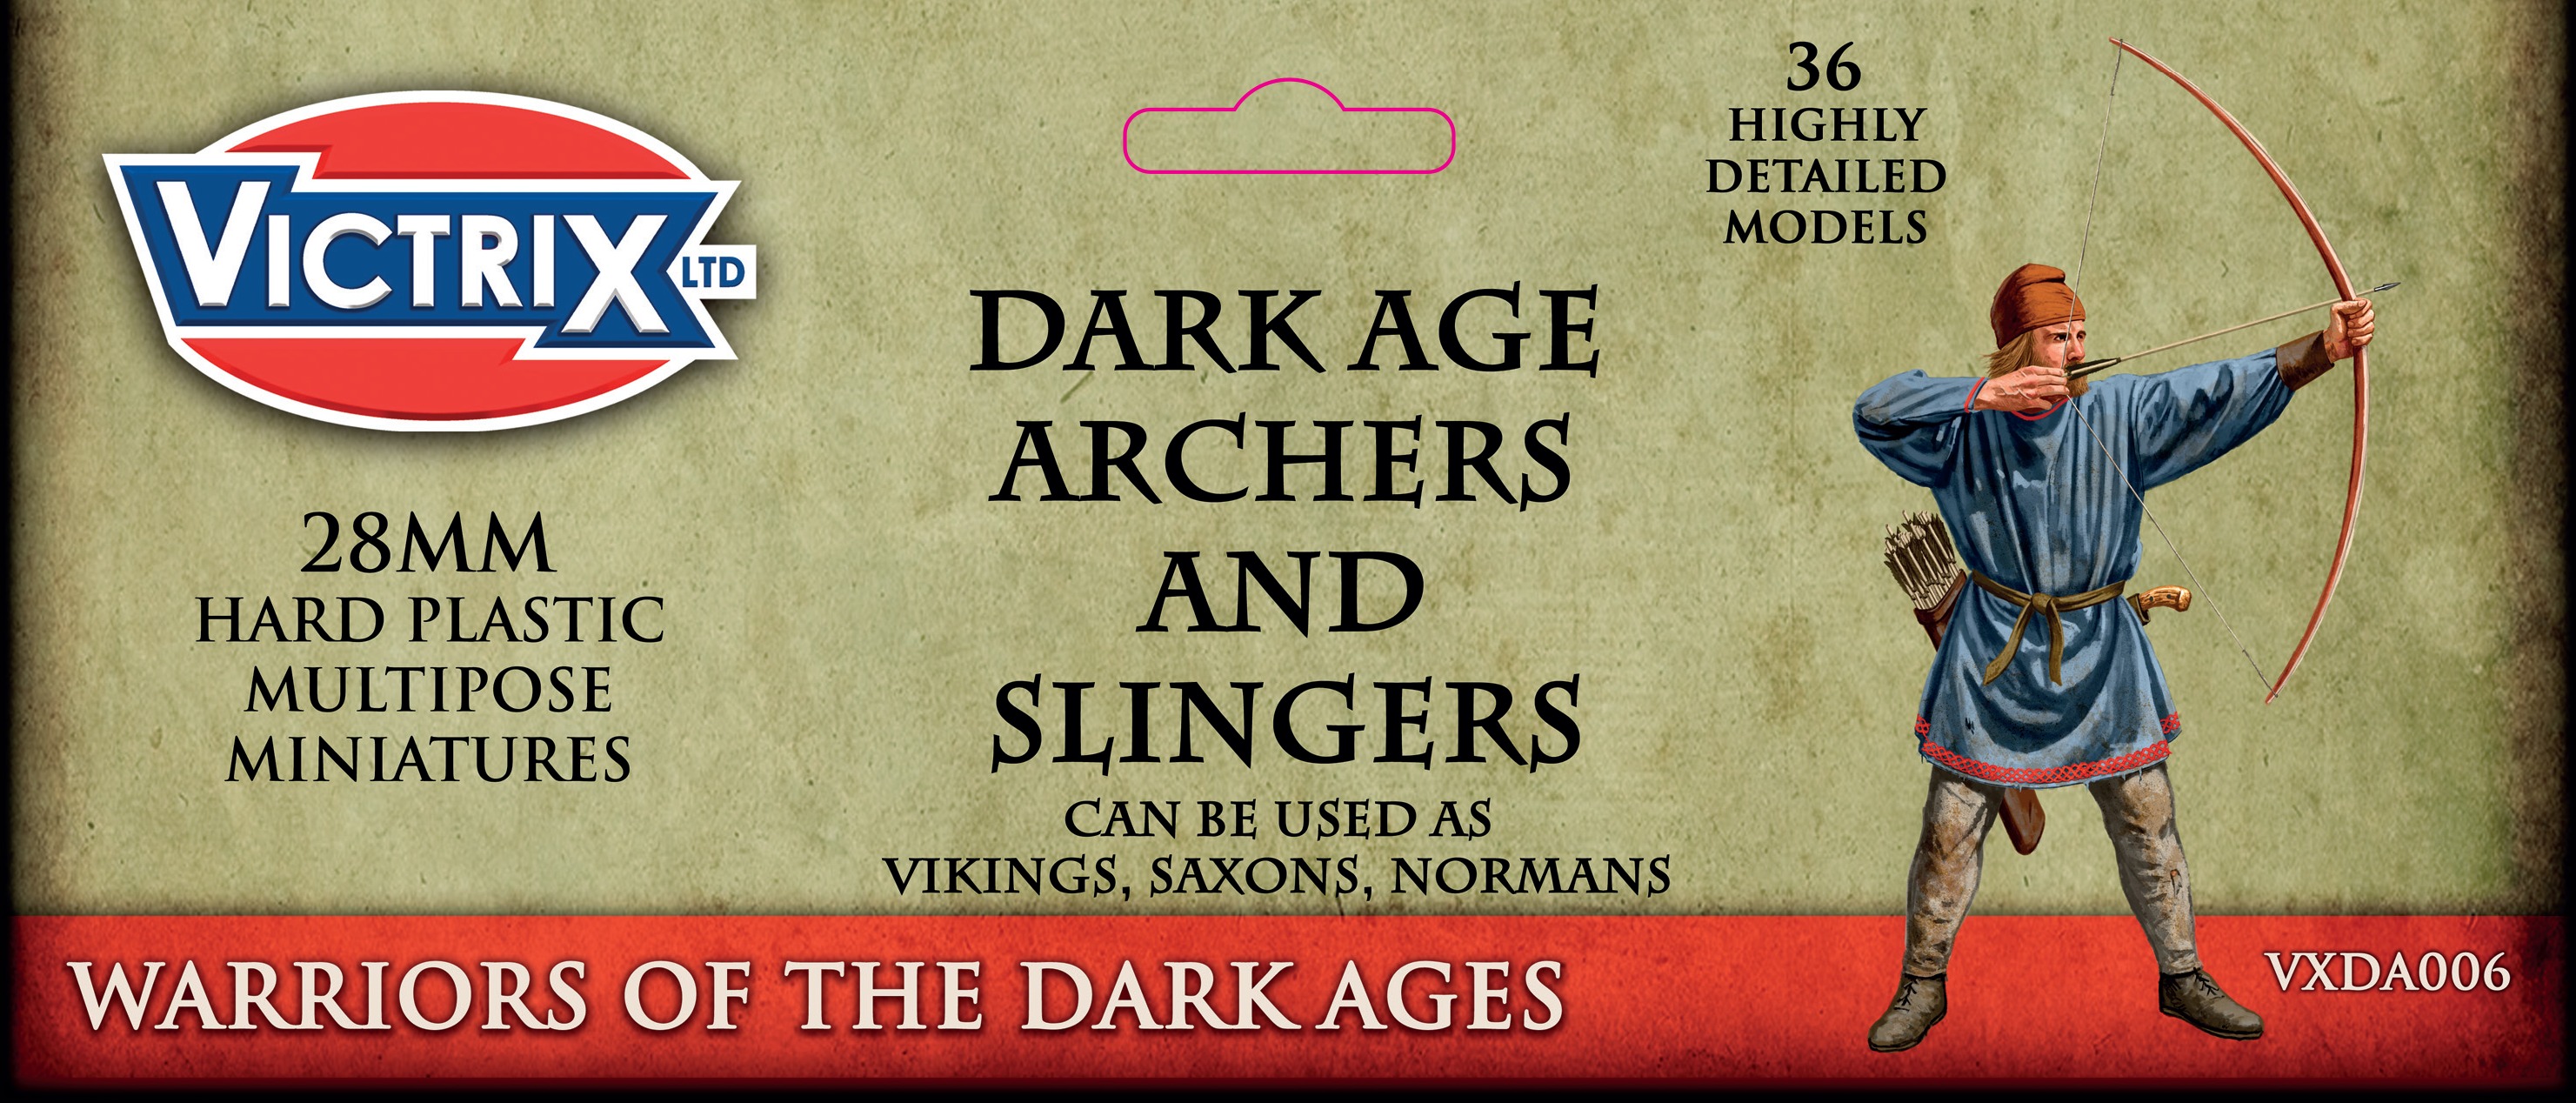 Dark Age Archers And Slingers - Victrix